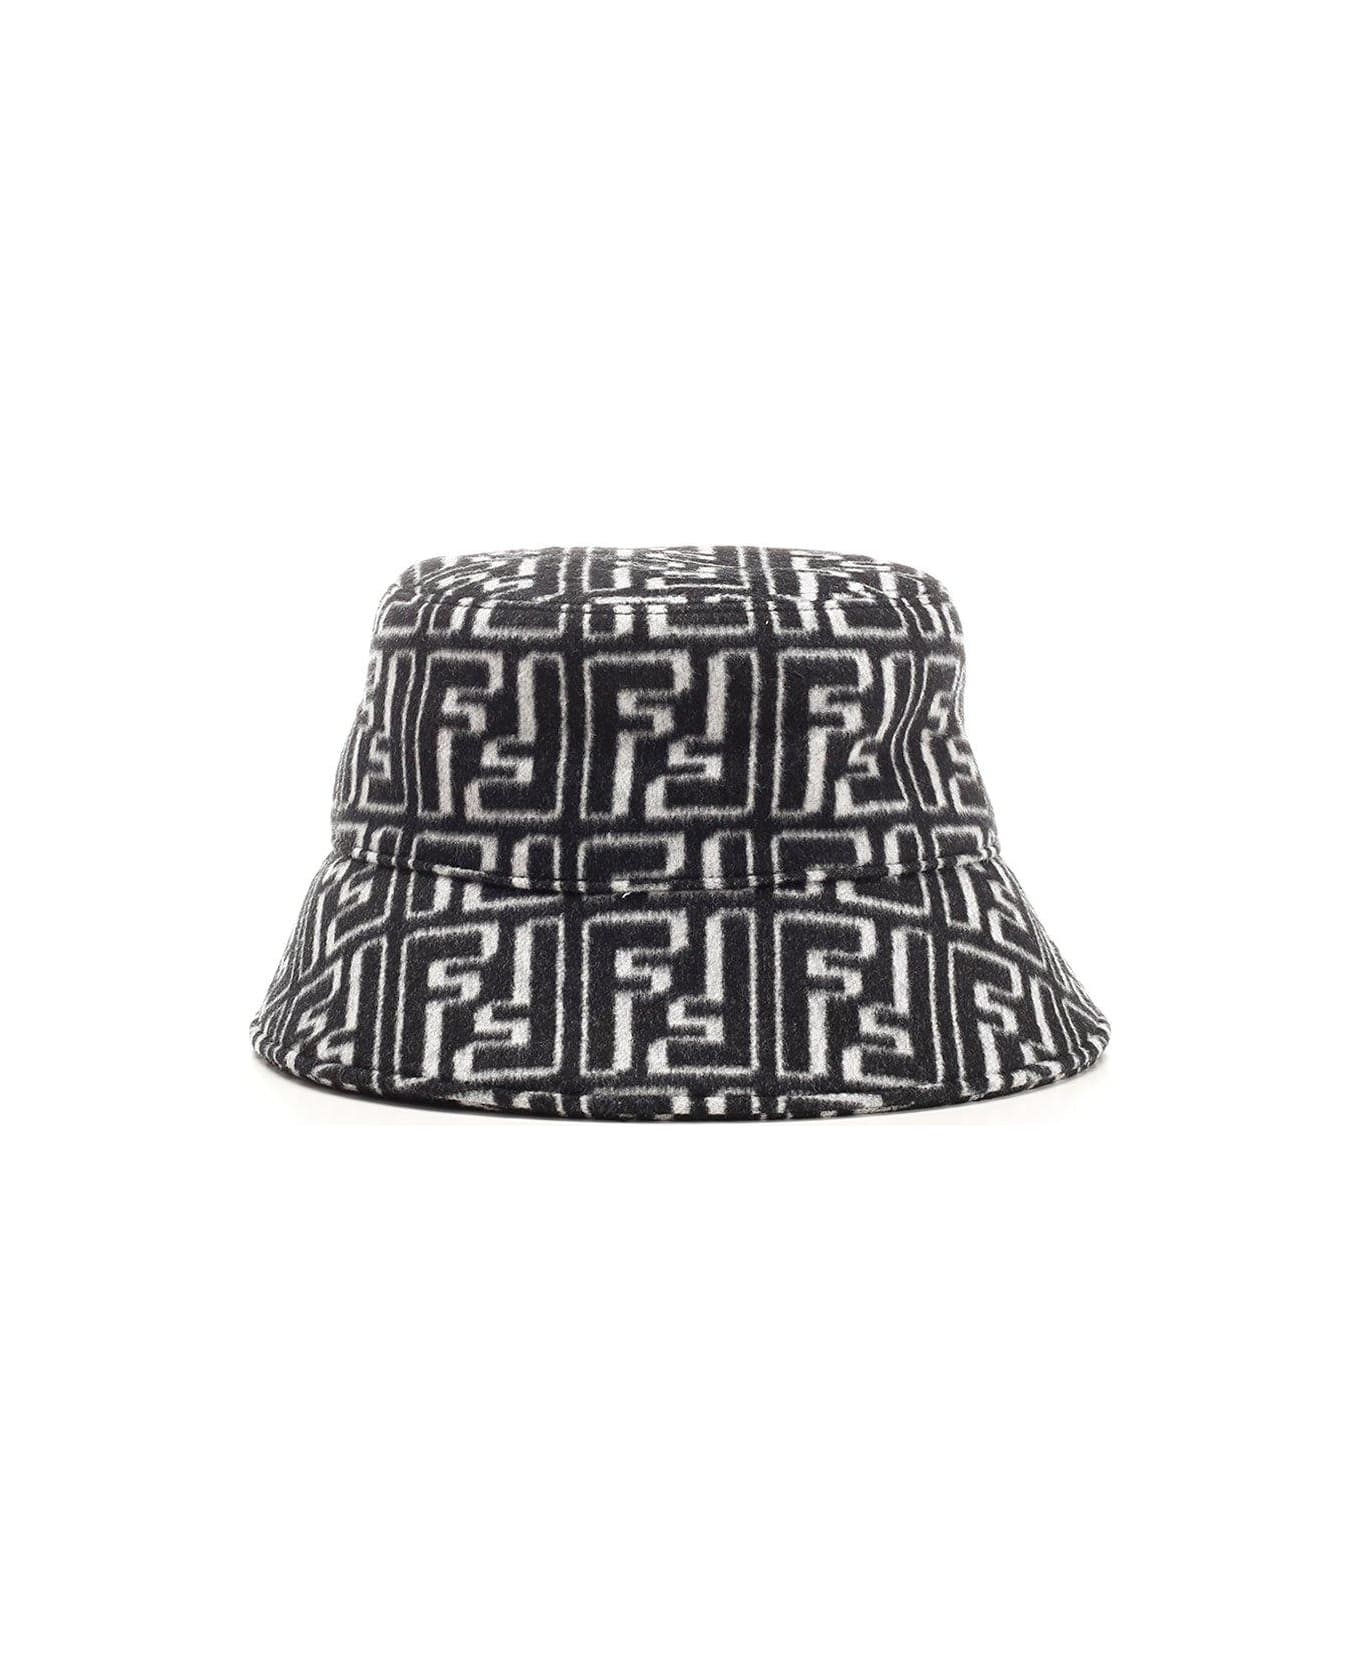 Fendi Monogram Jacquard Bucket Hat - Bianco/Nero